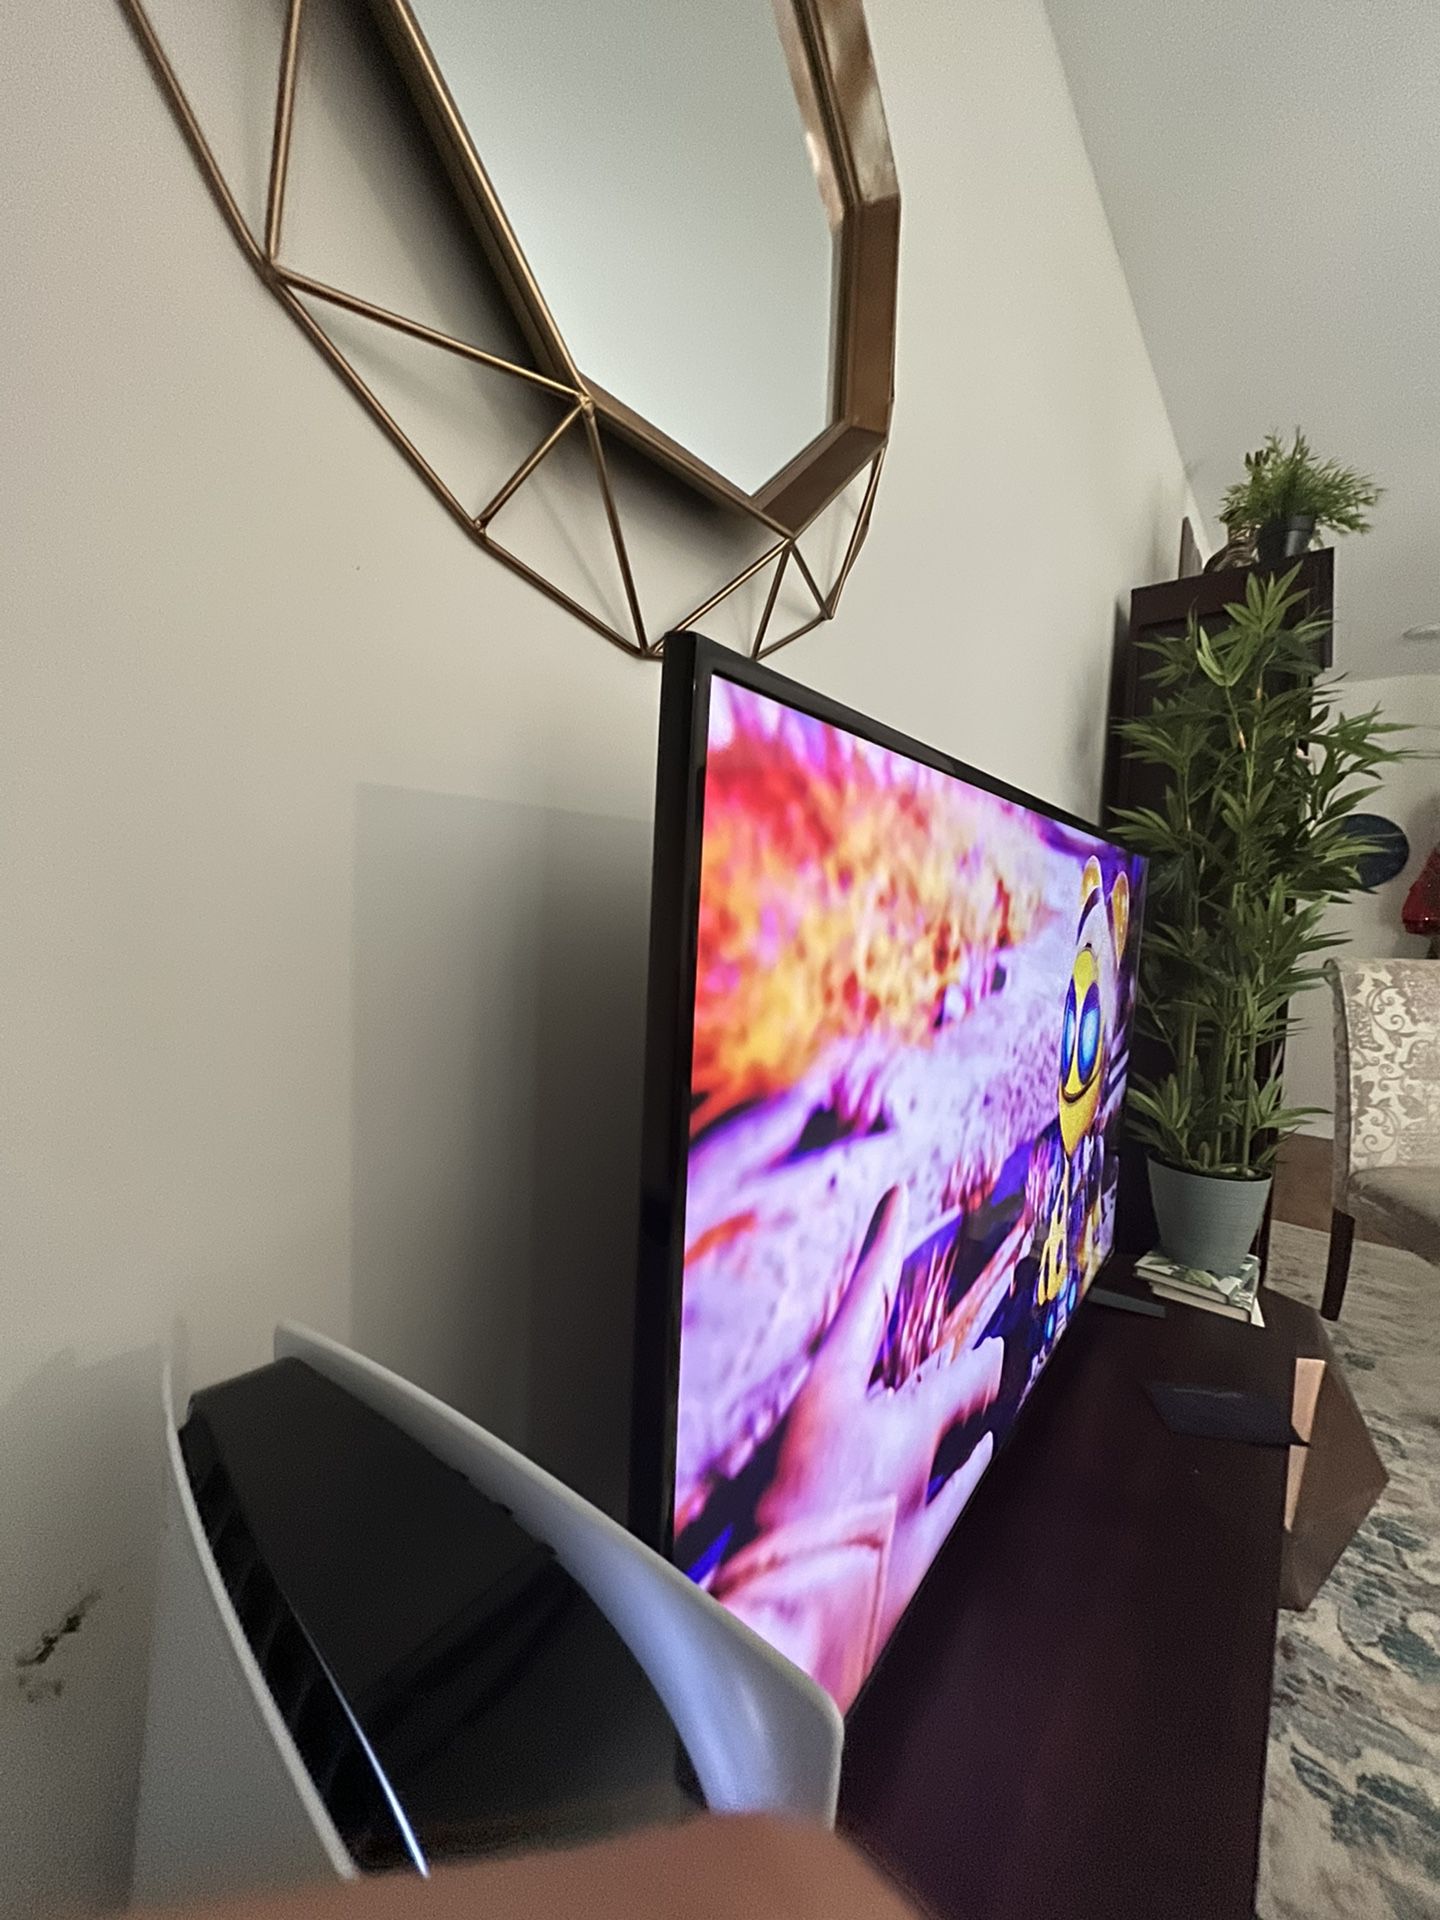 Samsung 4k Smart Tv  55 Inches  $ 250 